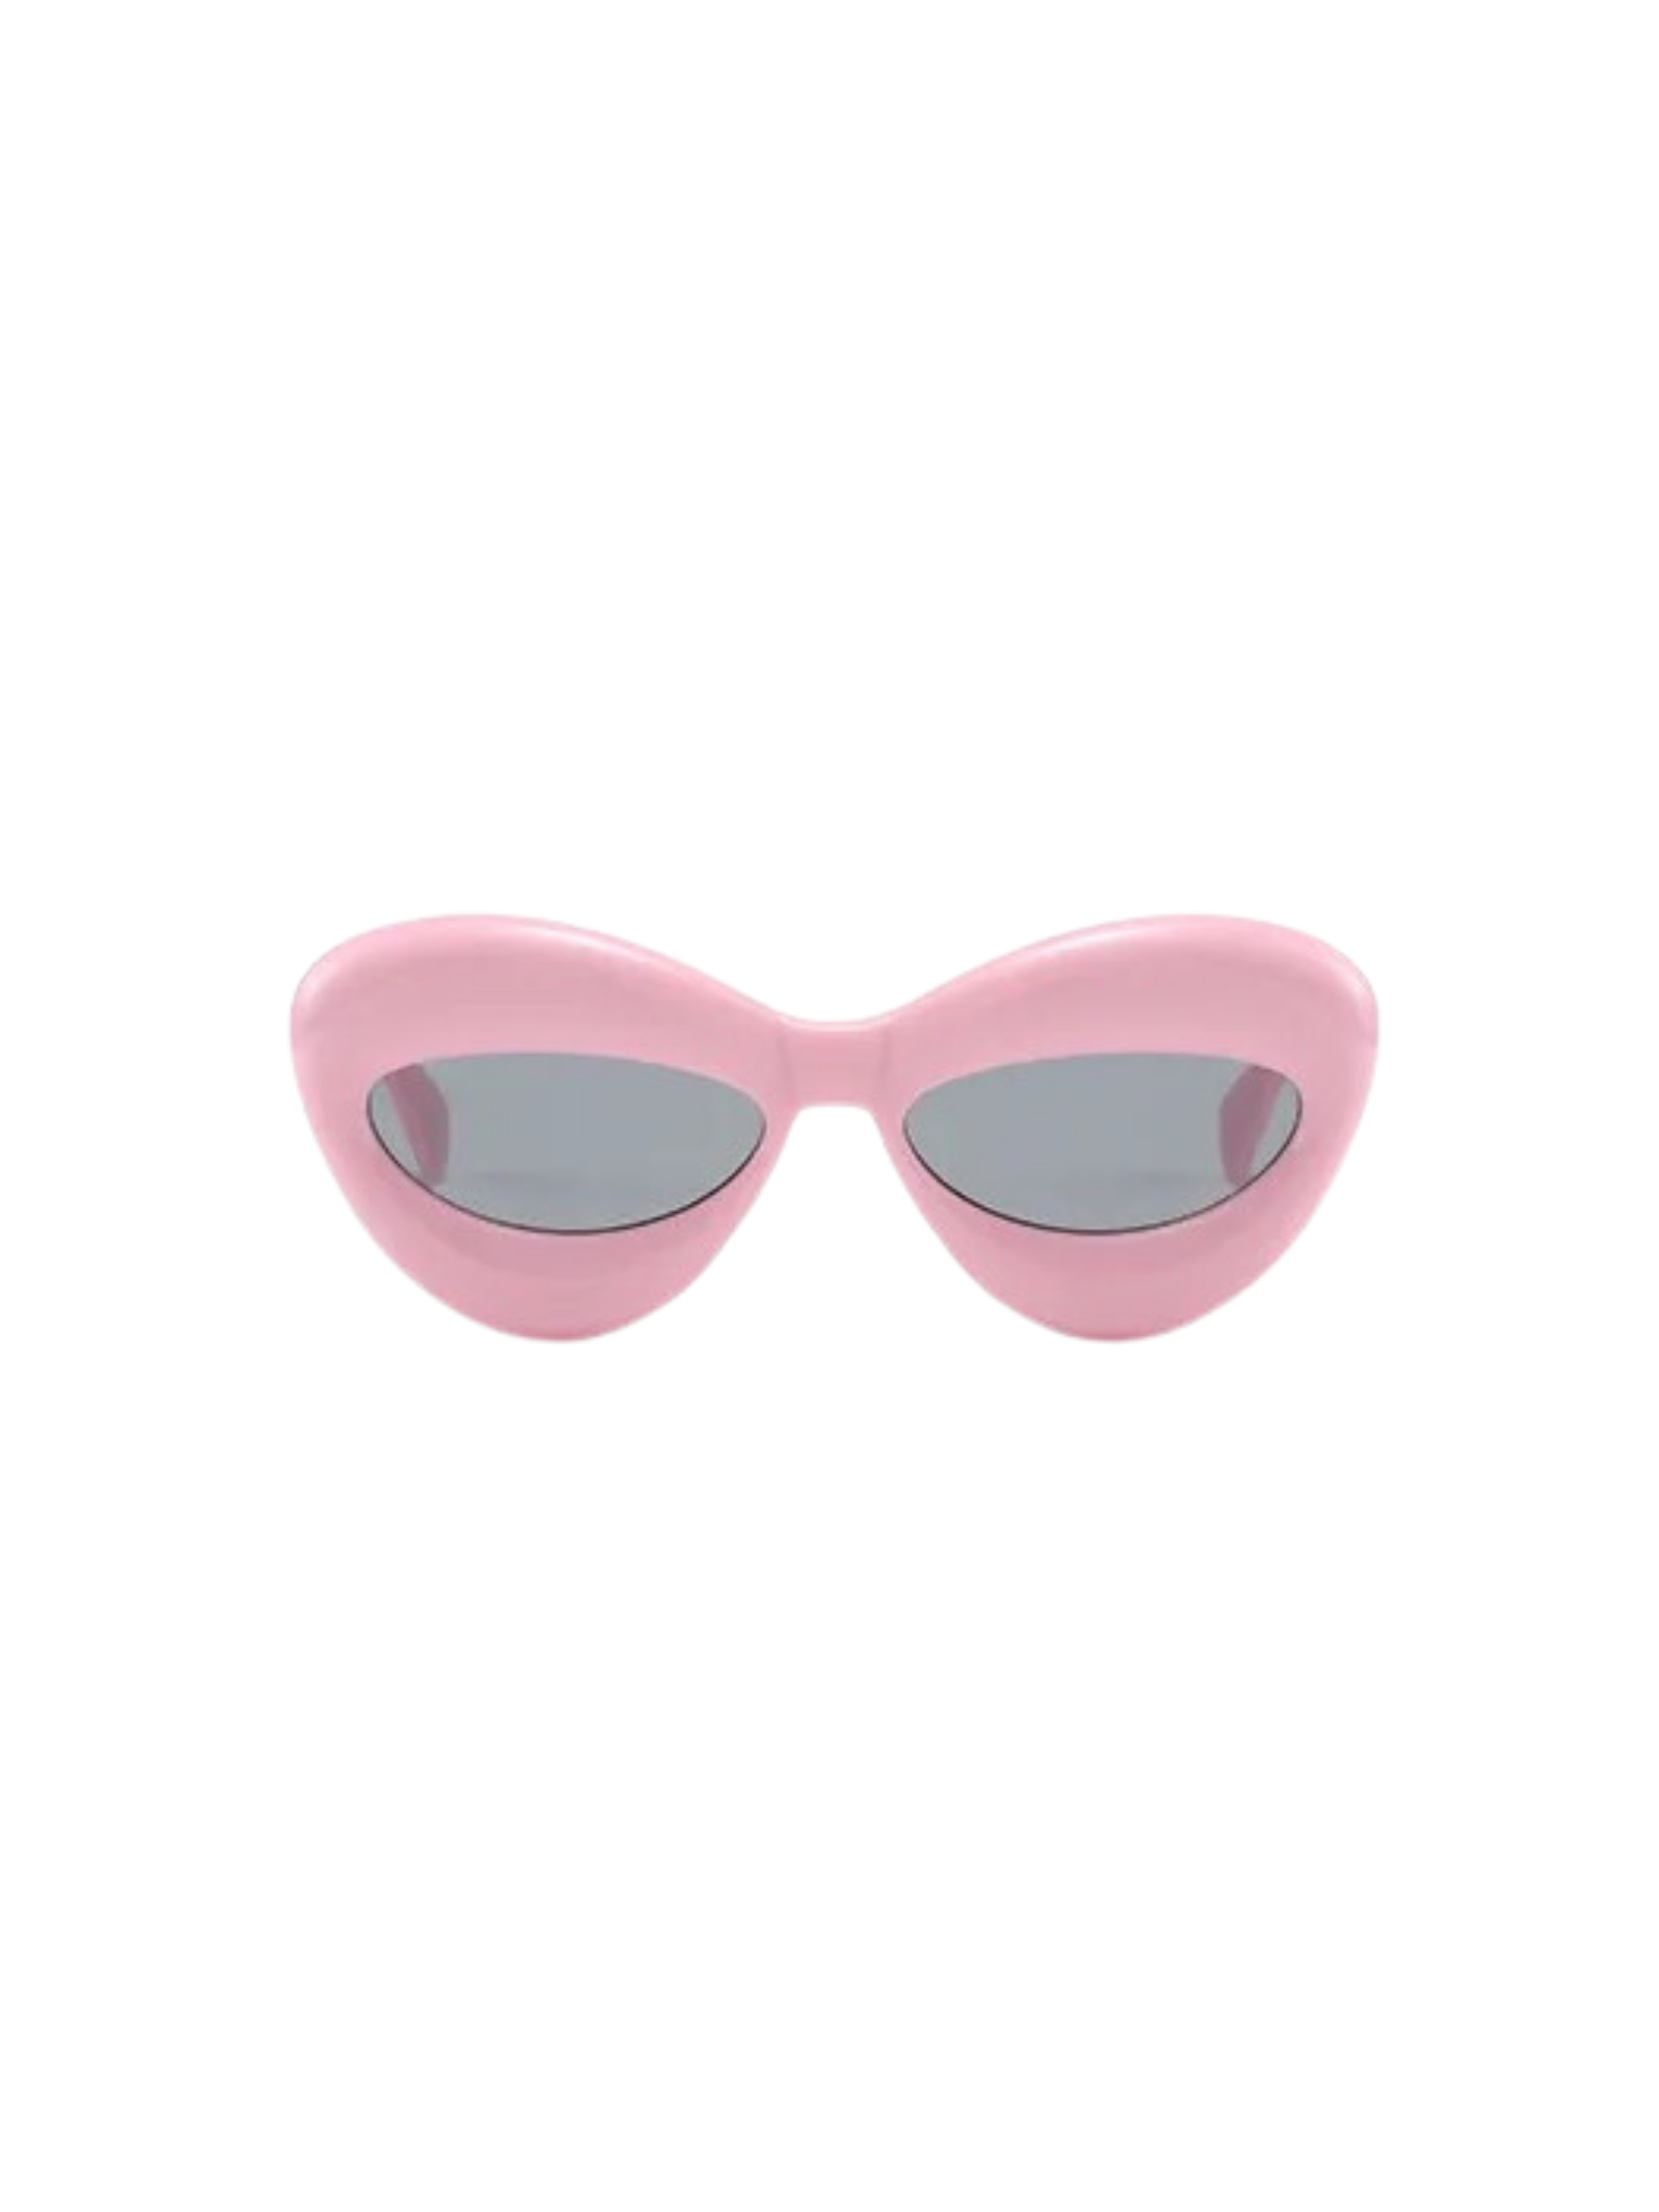 GOLDxTEAL pink cat eye sunglasses.